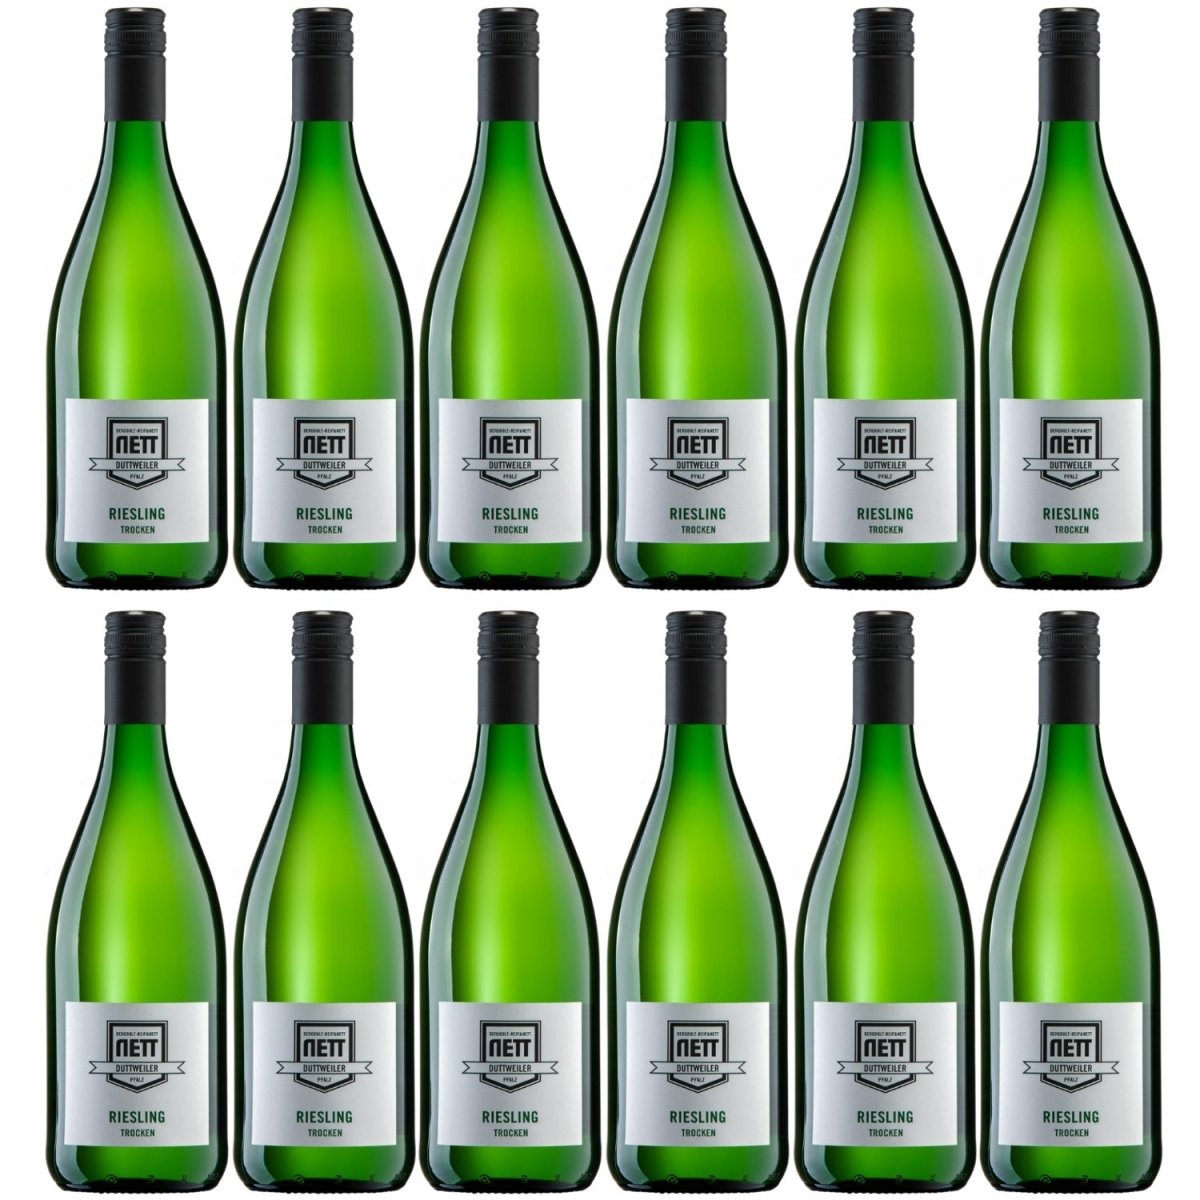 Bergdolt-Reif & Nett Creation Riesling Weißwein Wein trocken Pfalz (12 x 0,75l) - Versanel -